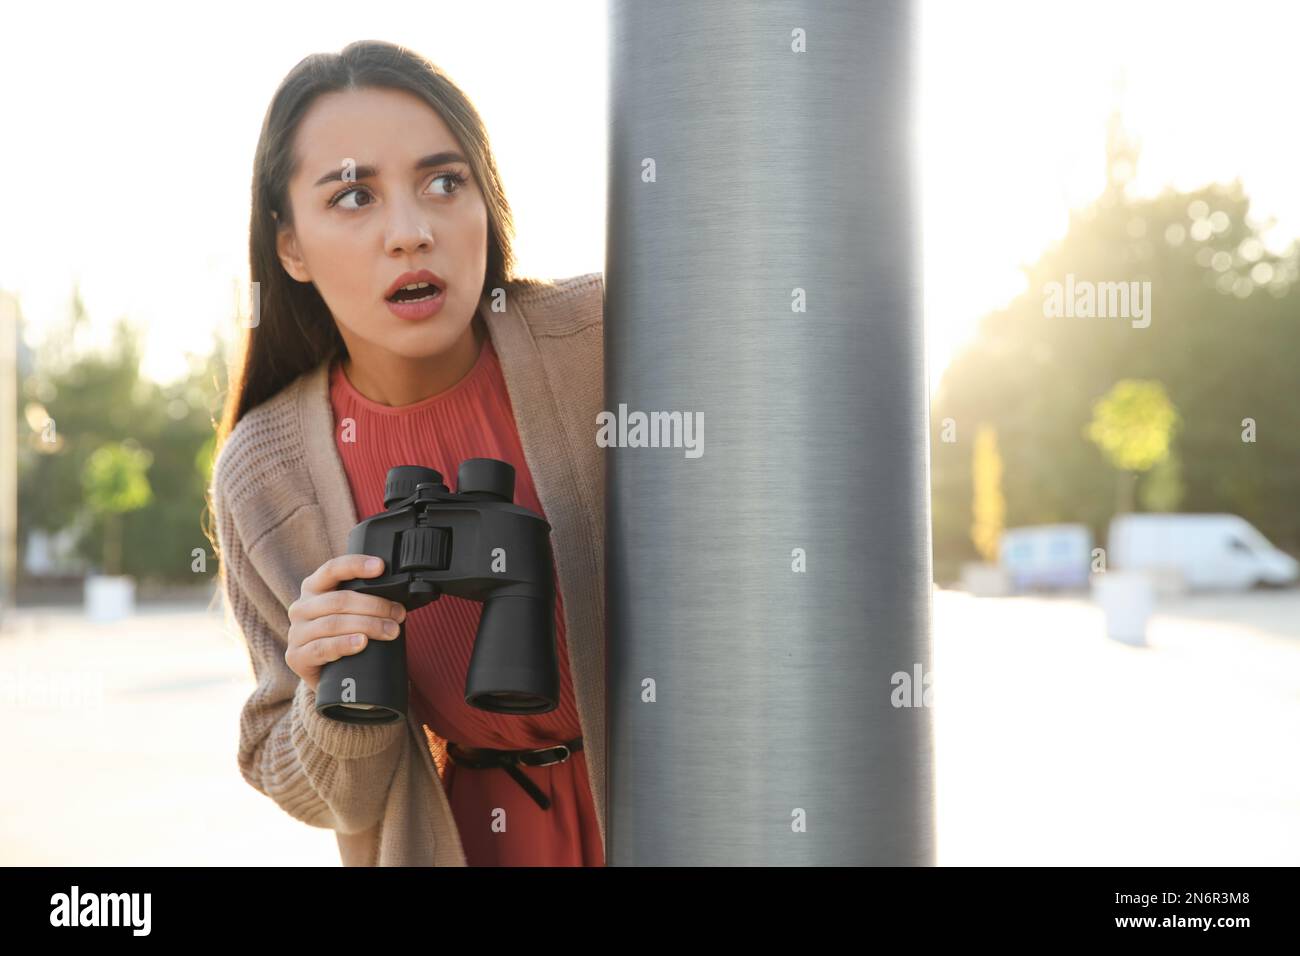 Jealous woman with binoculars spying on ex boyfriend outdoors Stock Photo